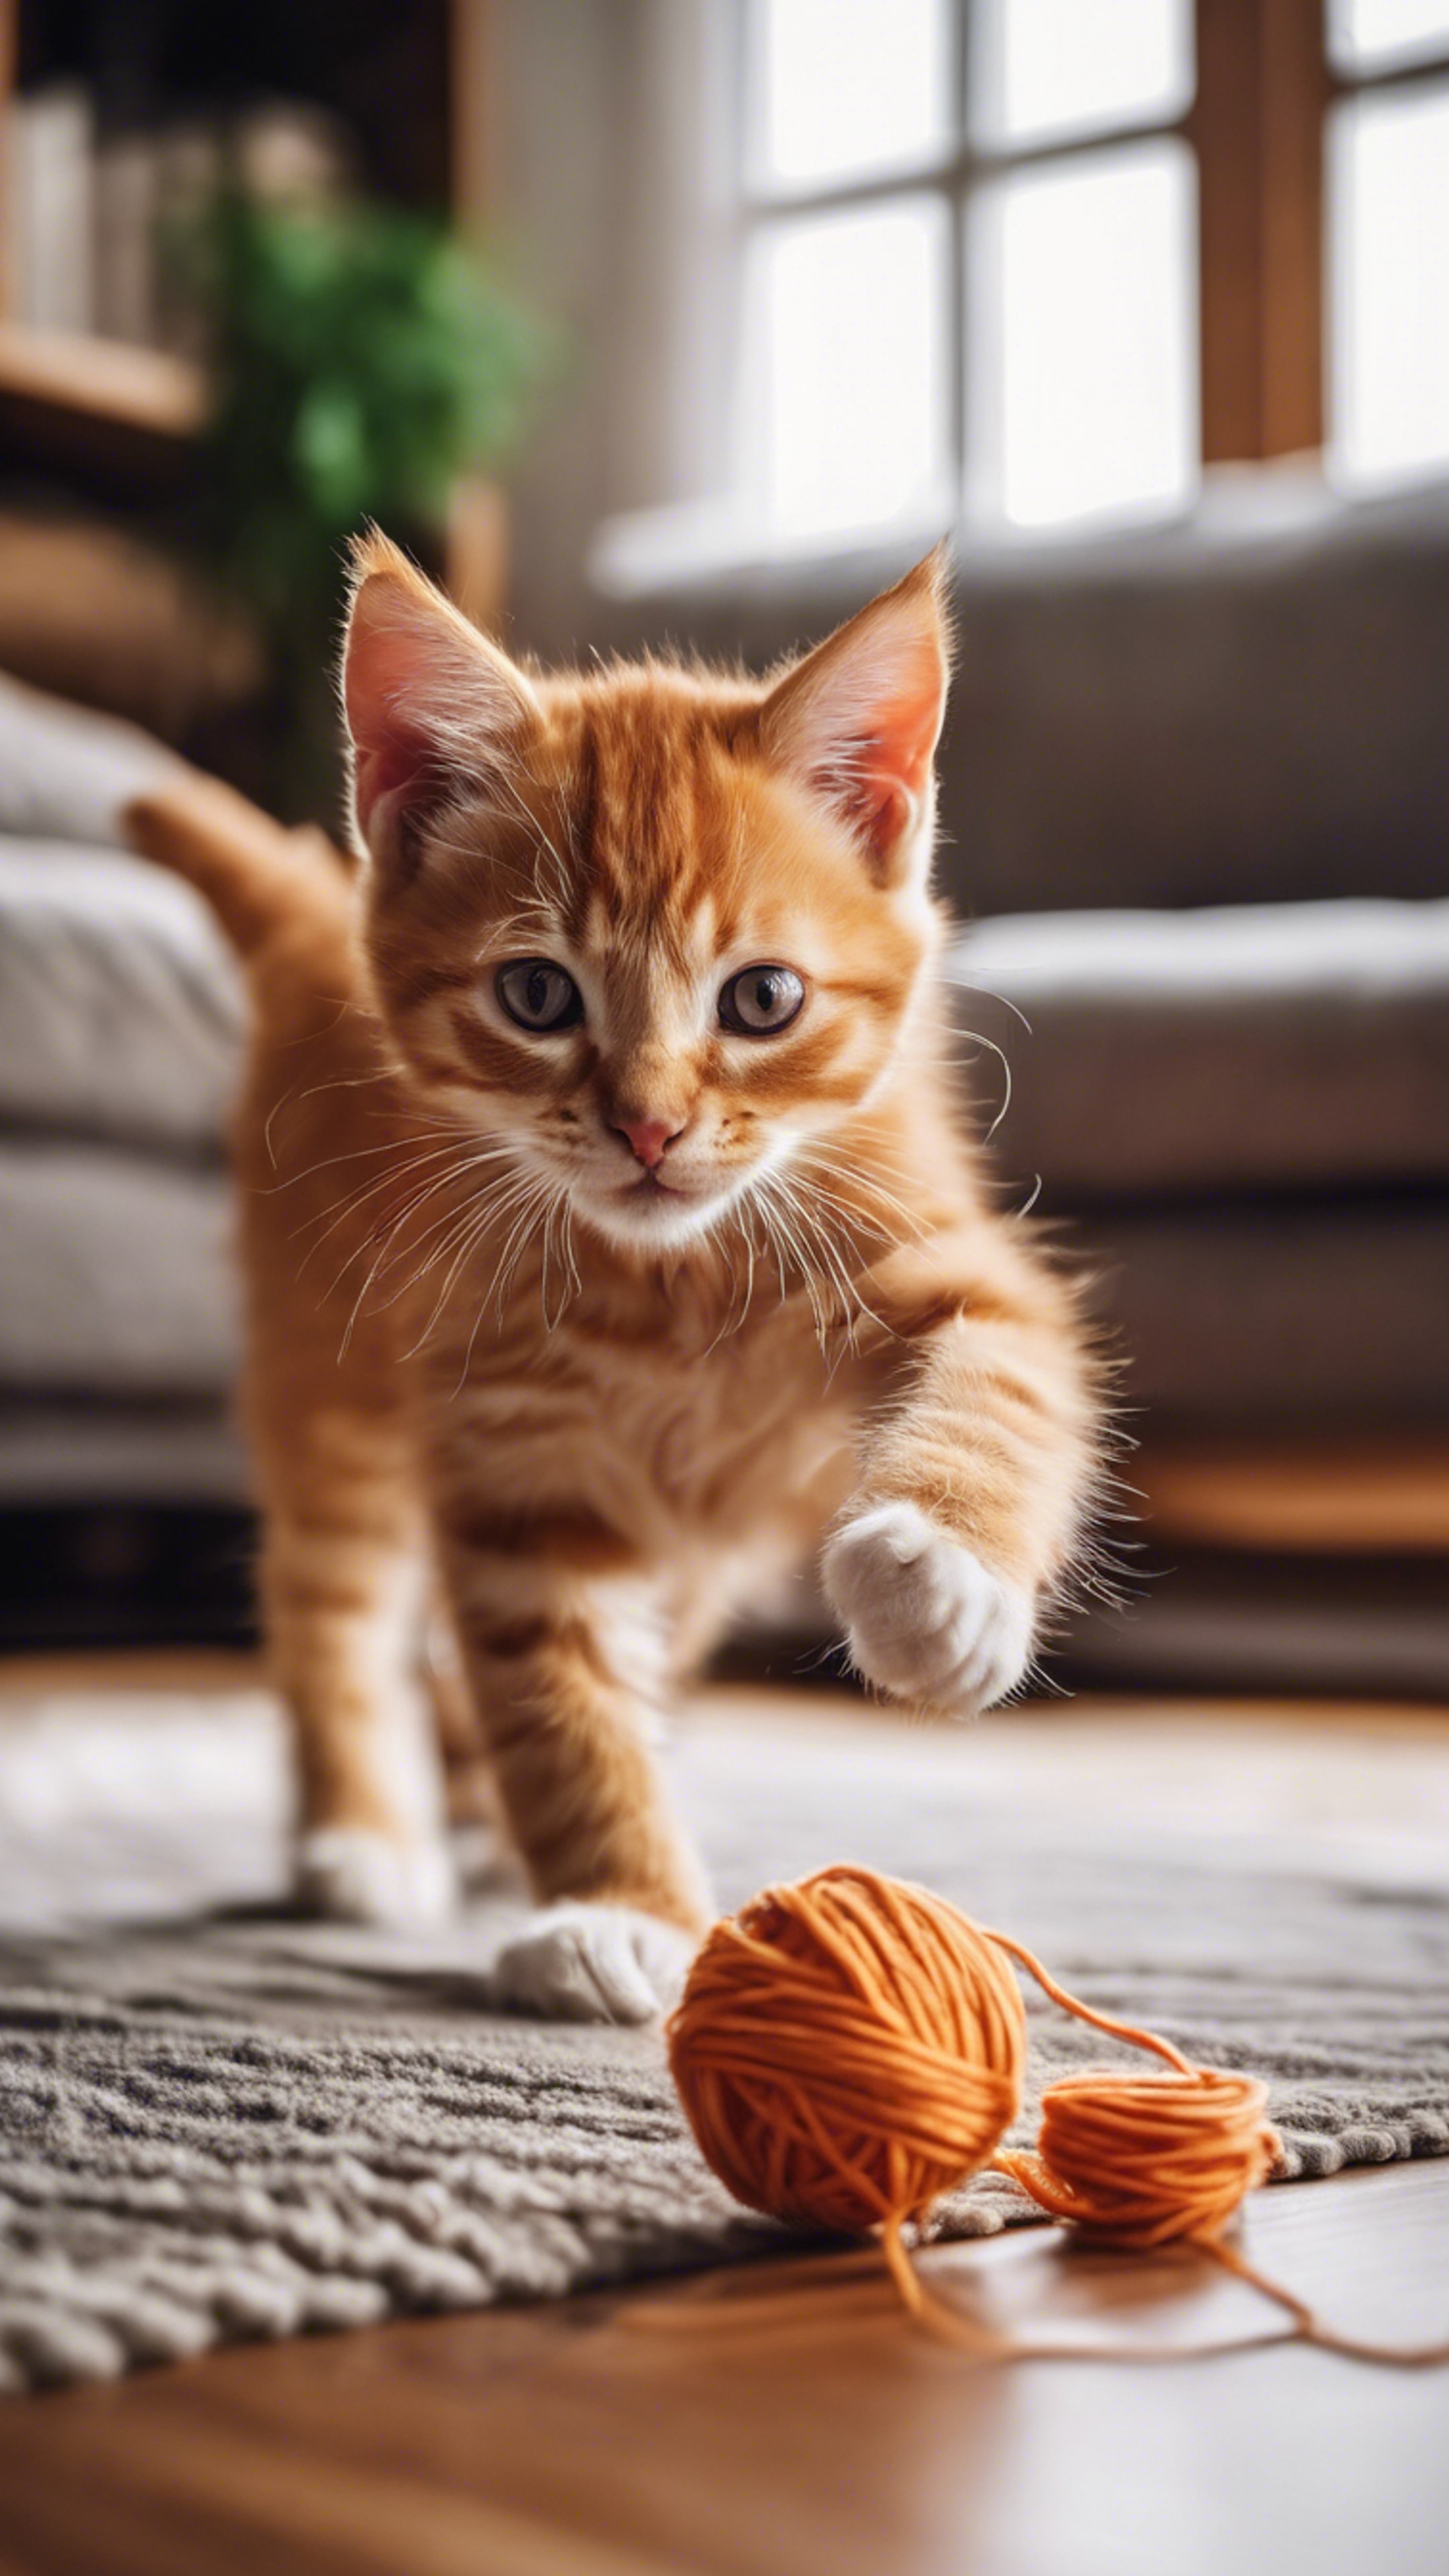 A playful orange tabby kitten, chasing a ball of yarn in a cozy wooden living room. duvar kağıdı[48ba56b3f1554d3caaed]